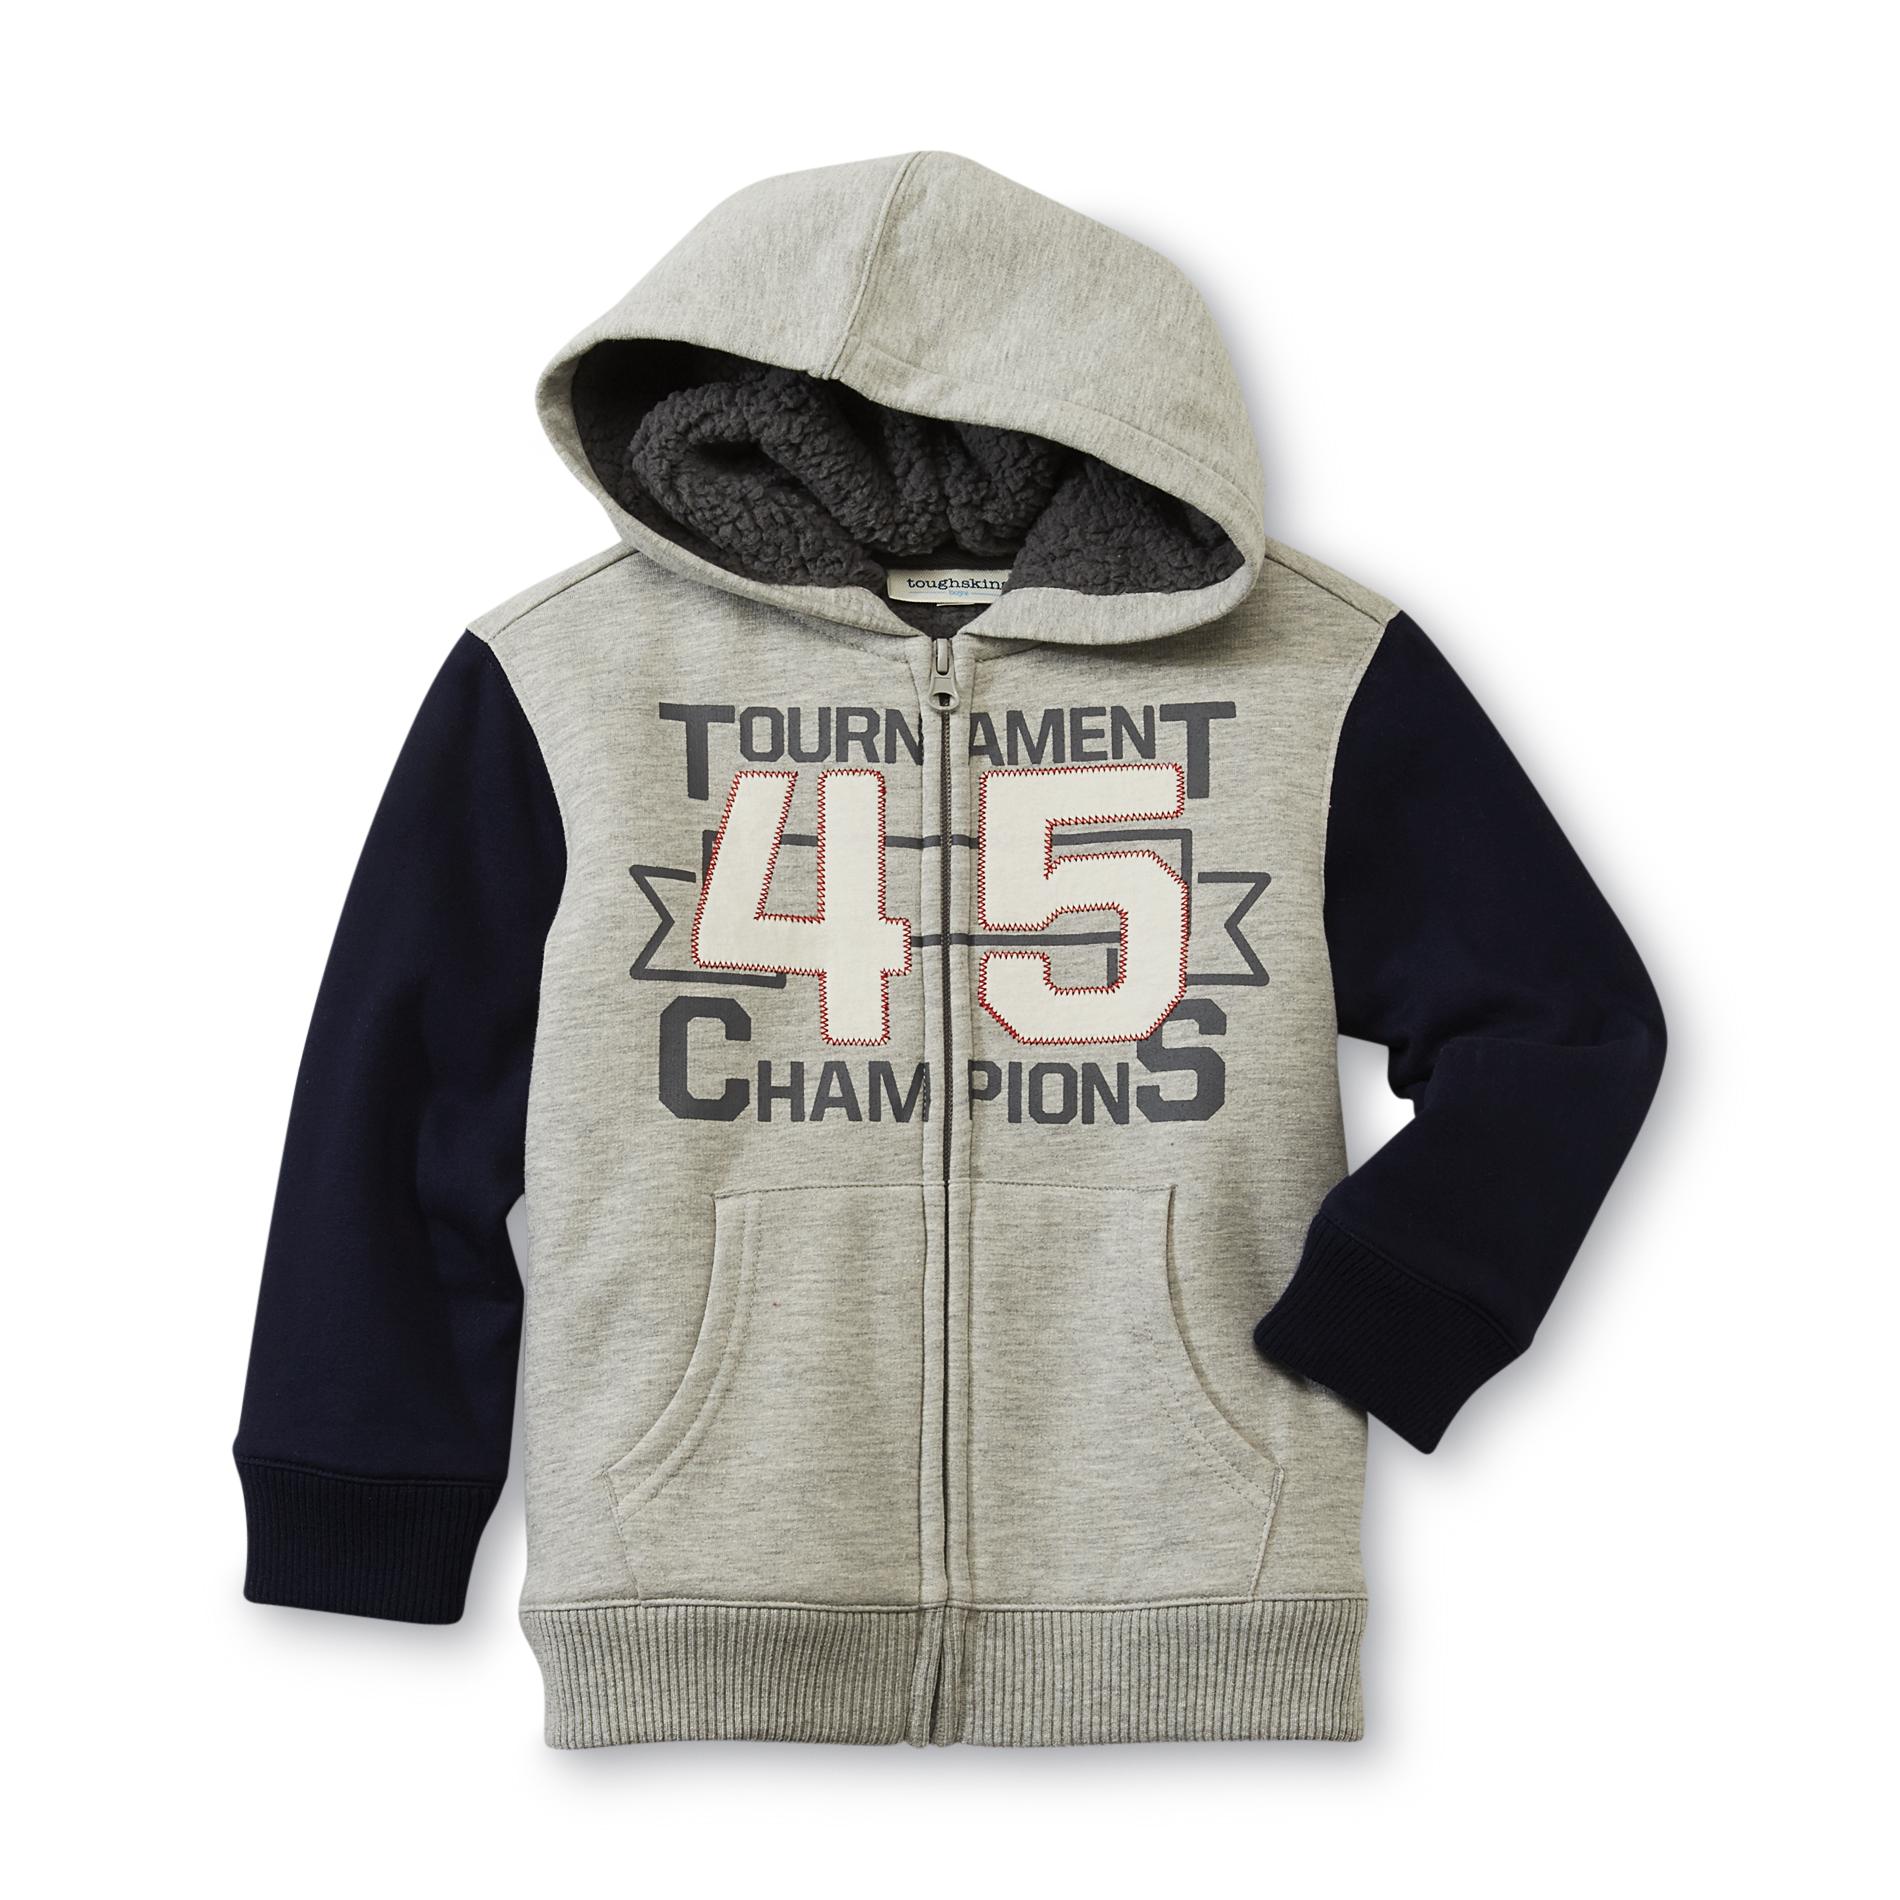 Toughskins Boy's Hoodie Jacket - Champions